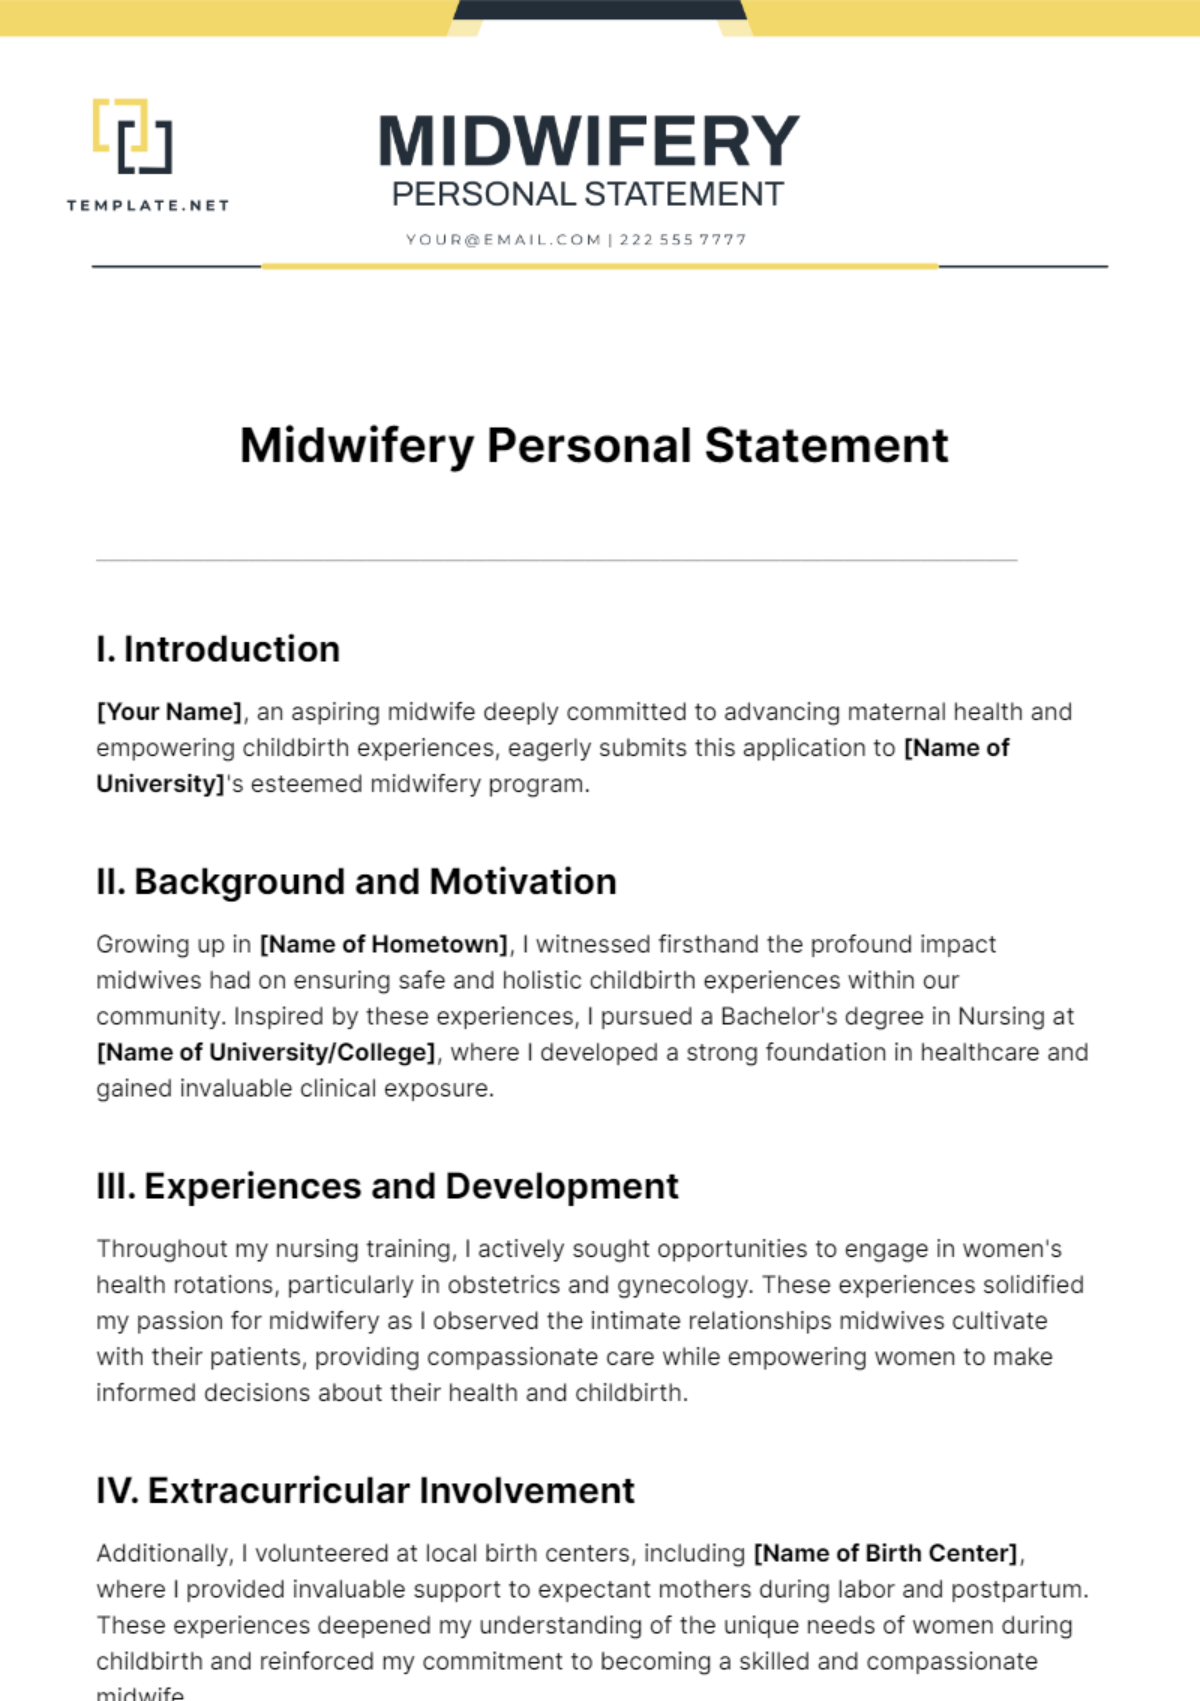 Midwifery Personal Statement Template